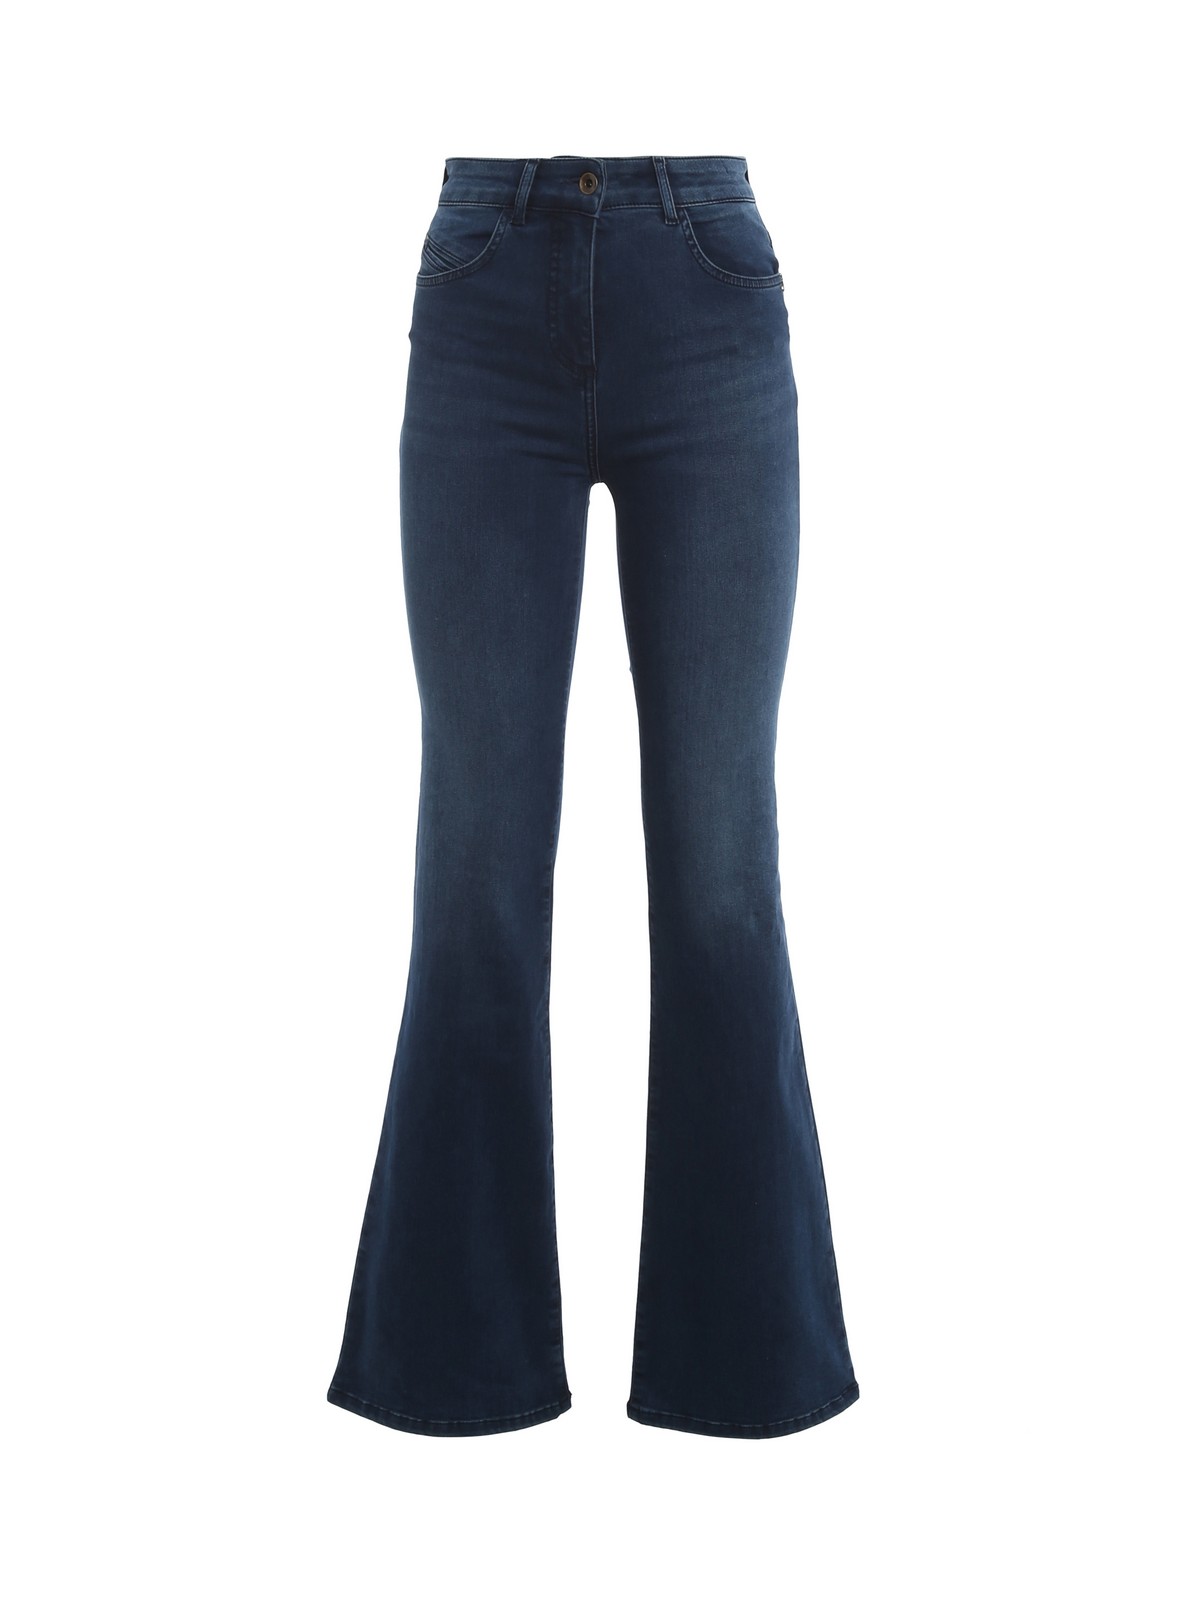 Kilimanjaro Inconsistent Aanvrager Flared jeans Patrizia Pepe - Embroidered pocket bootcut jeans -  8J0937A1HIBC843